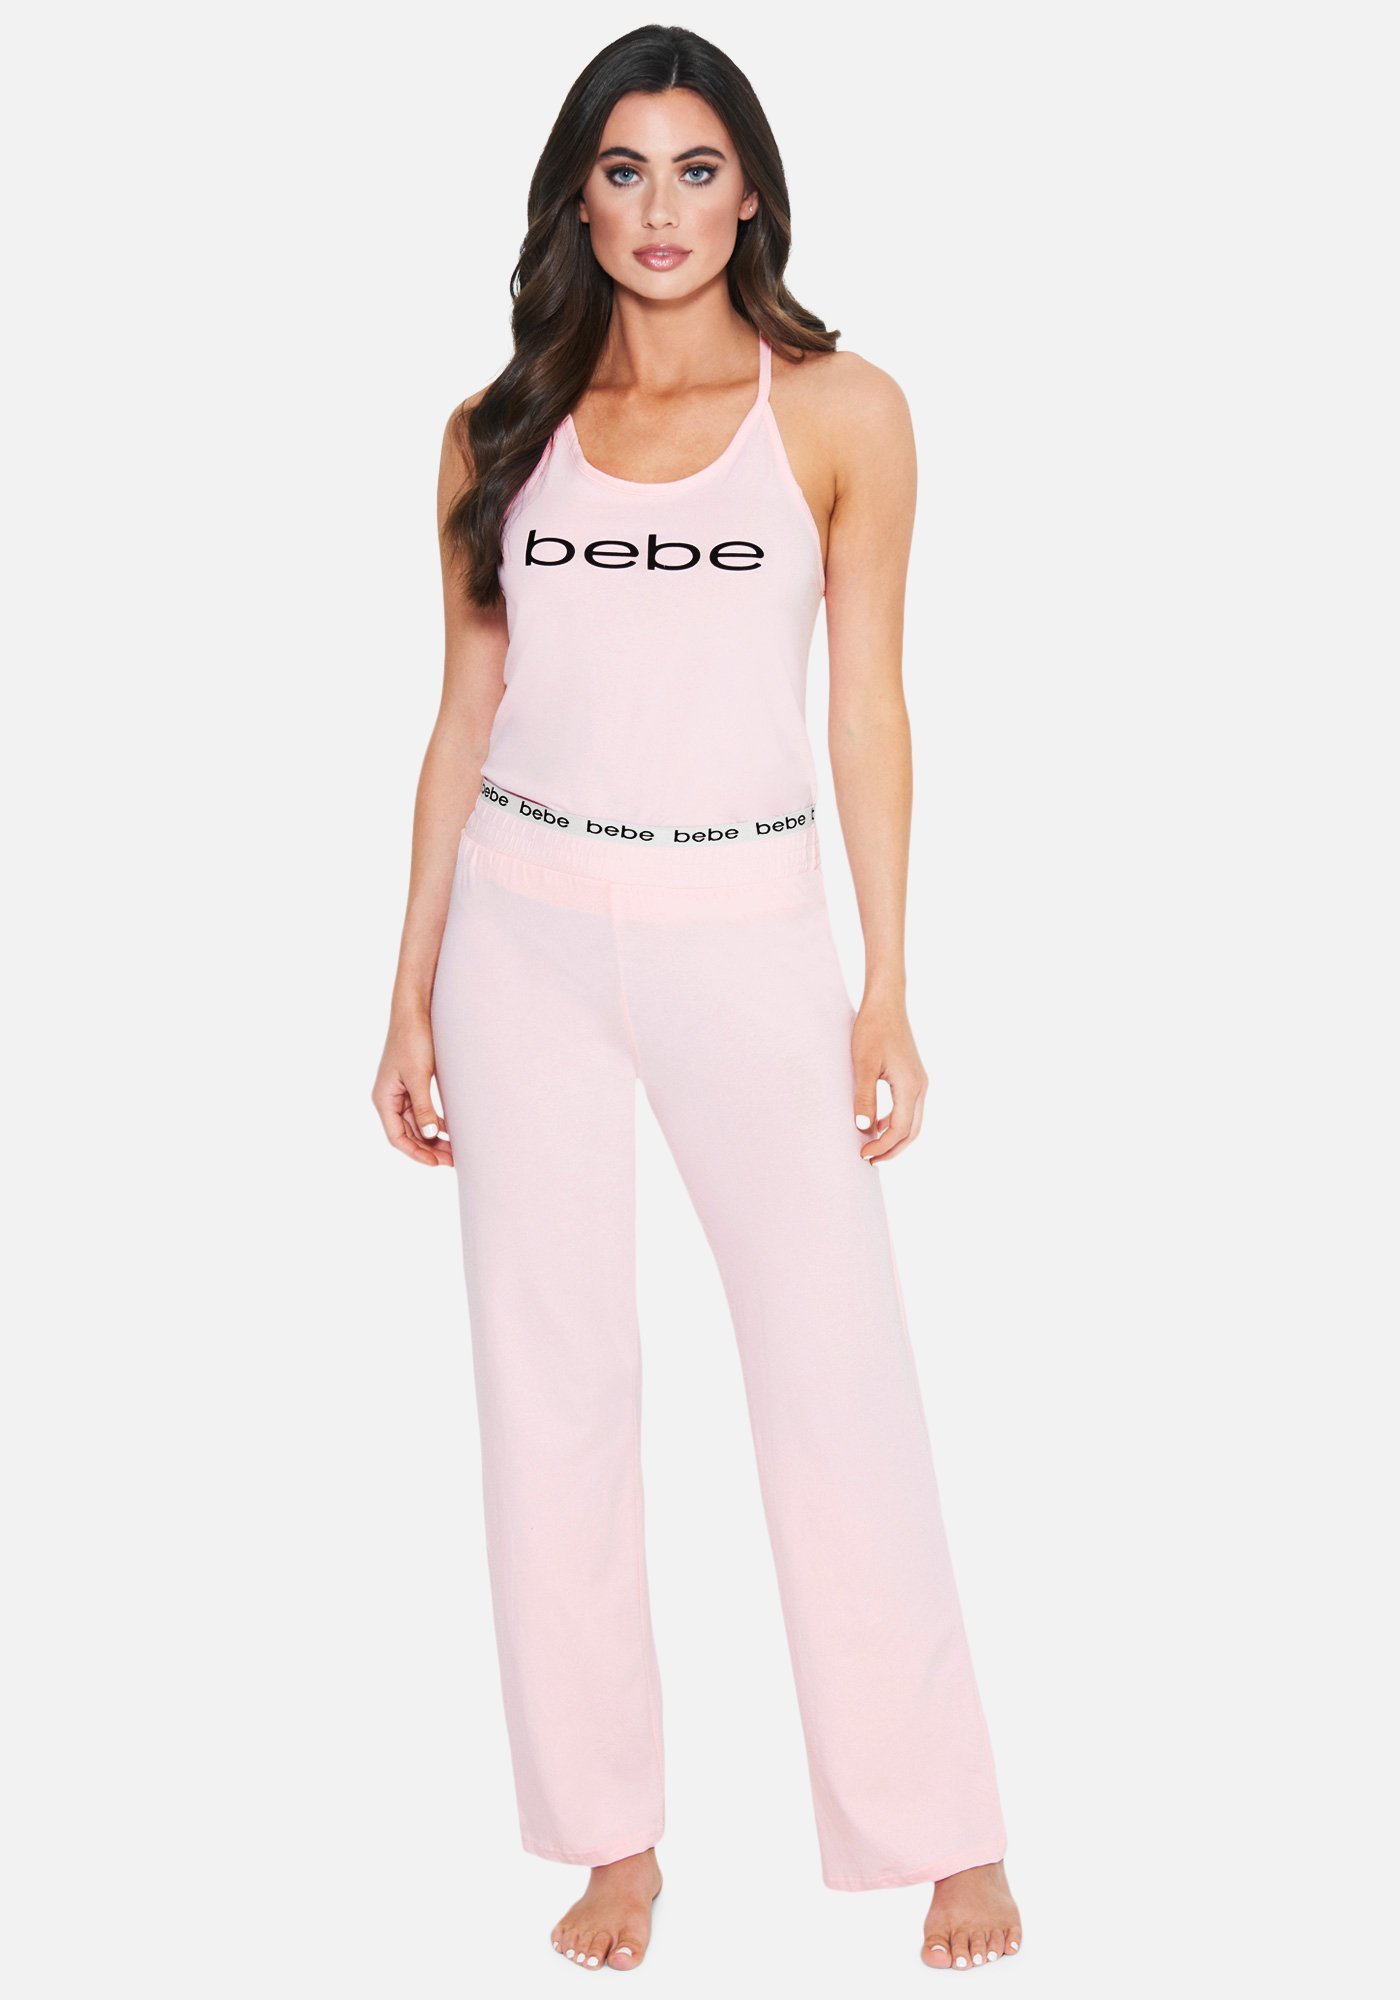 Women's Bebe Logo Ruffle Tank Top Pant Set, Size XL in Light Pink Cotton